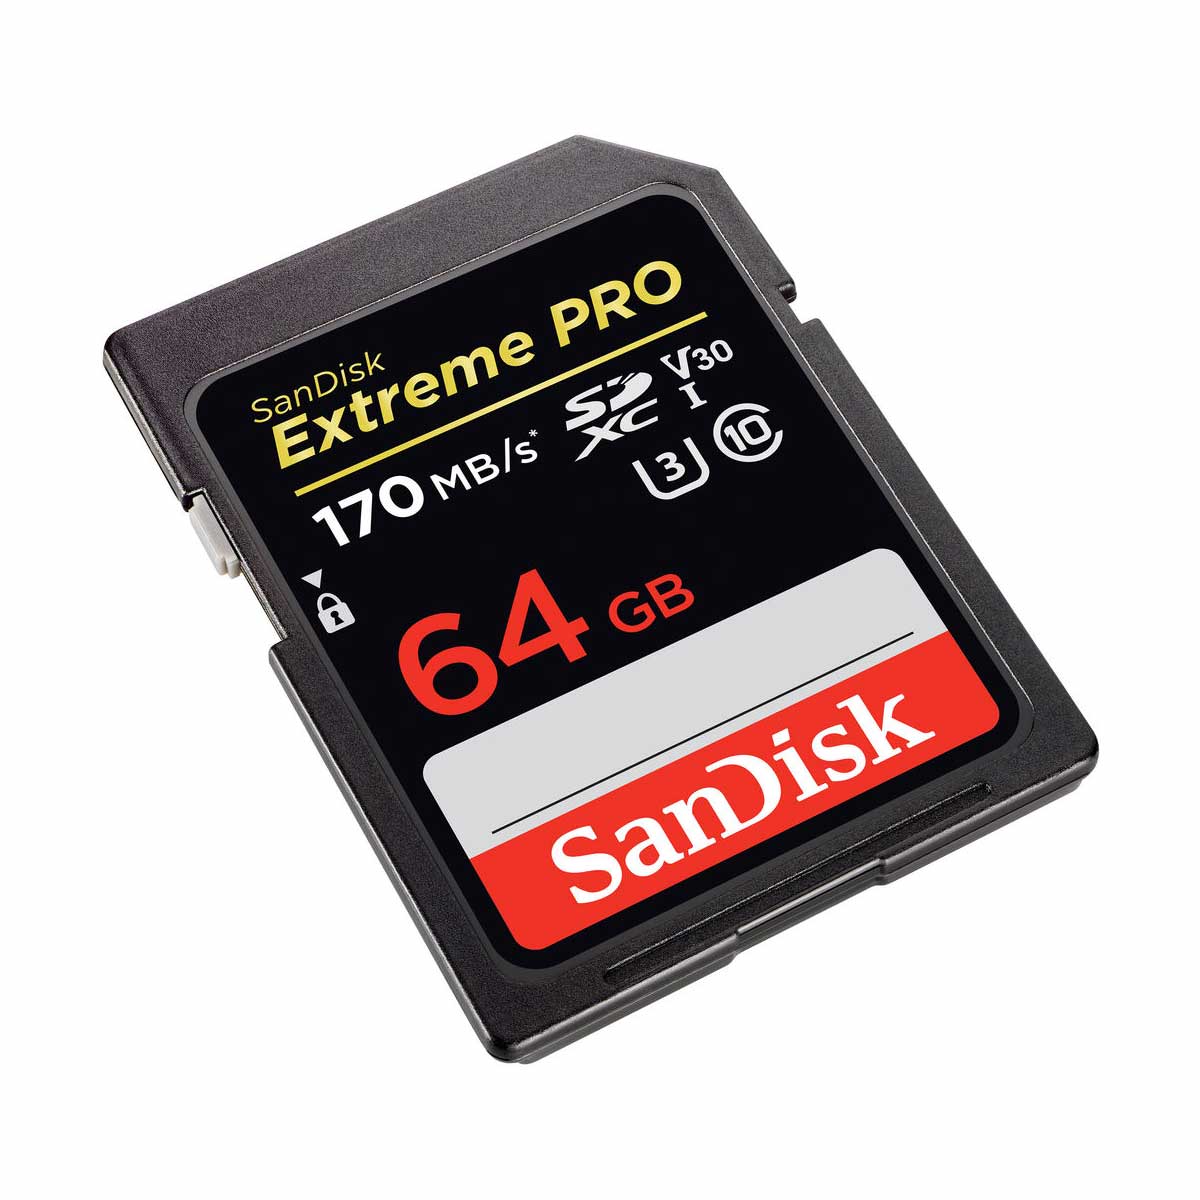 SanDisk 64GB Extreme PRO UHS-I SDXC Memory Card 170 MB/s